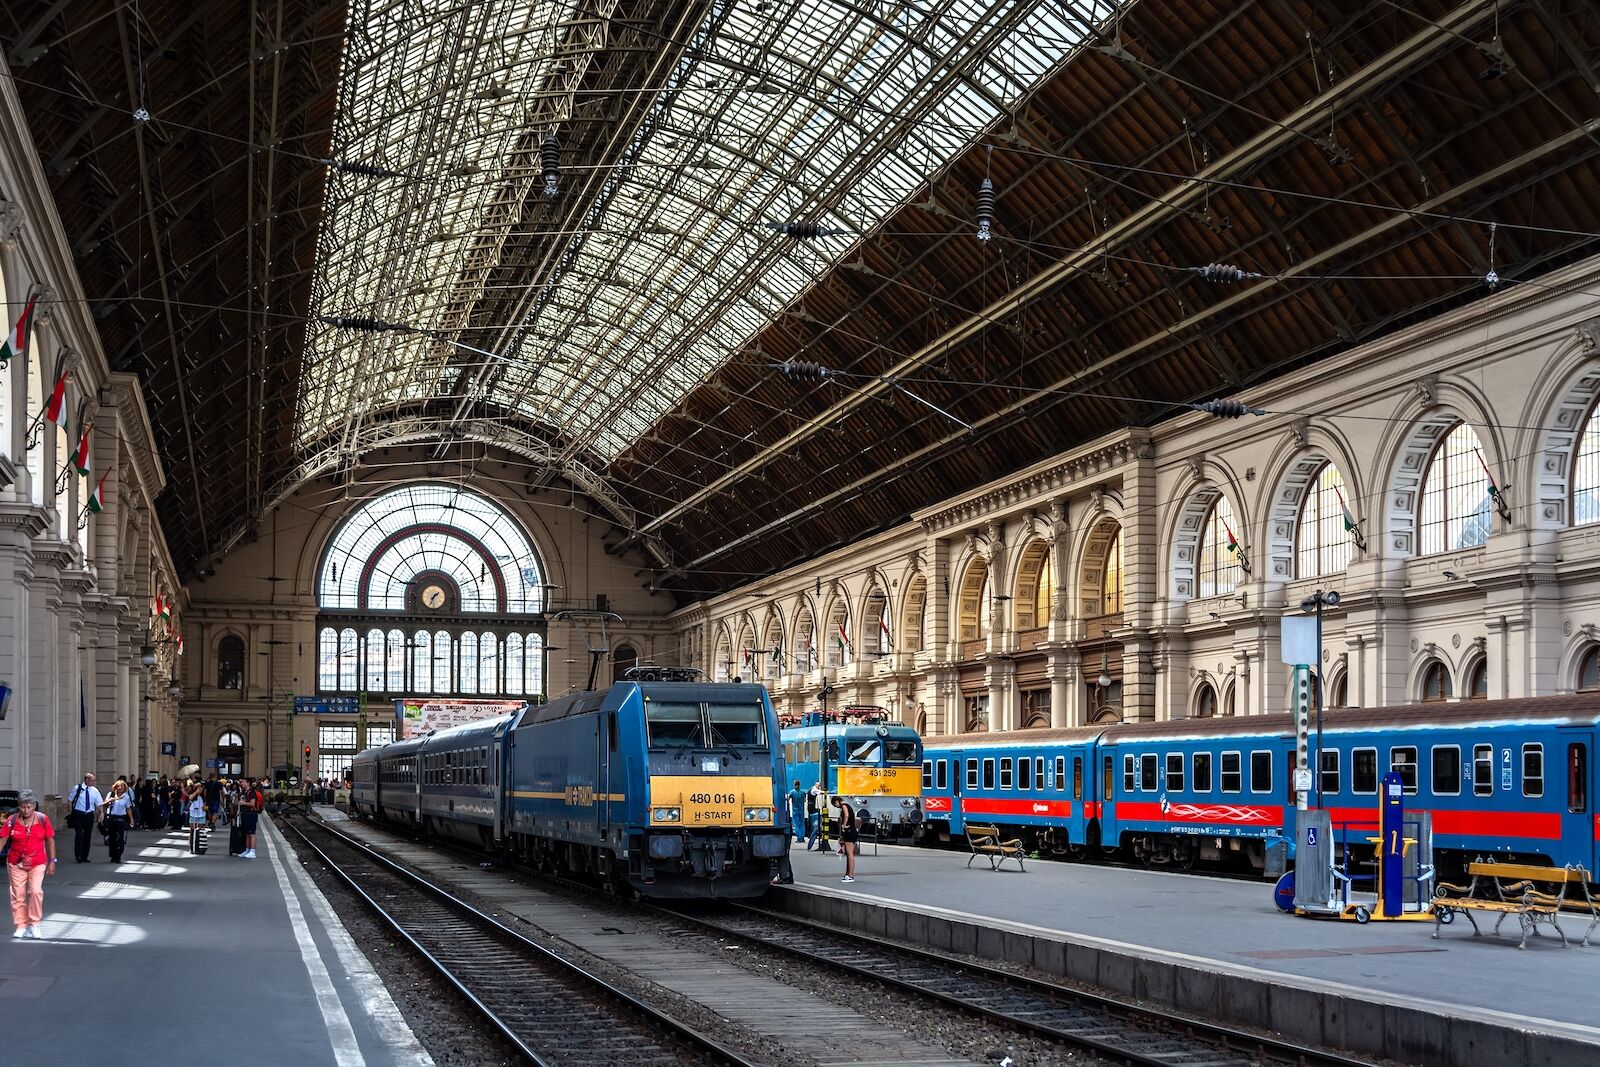 The beautiful Budapest Keleti train station